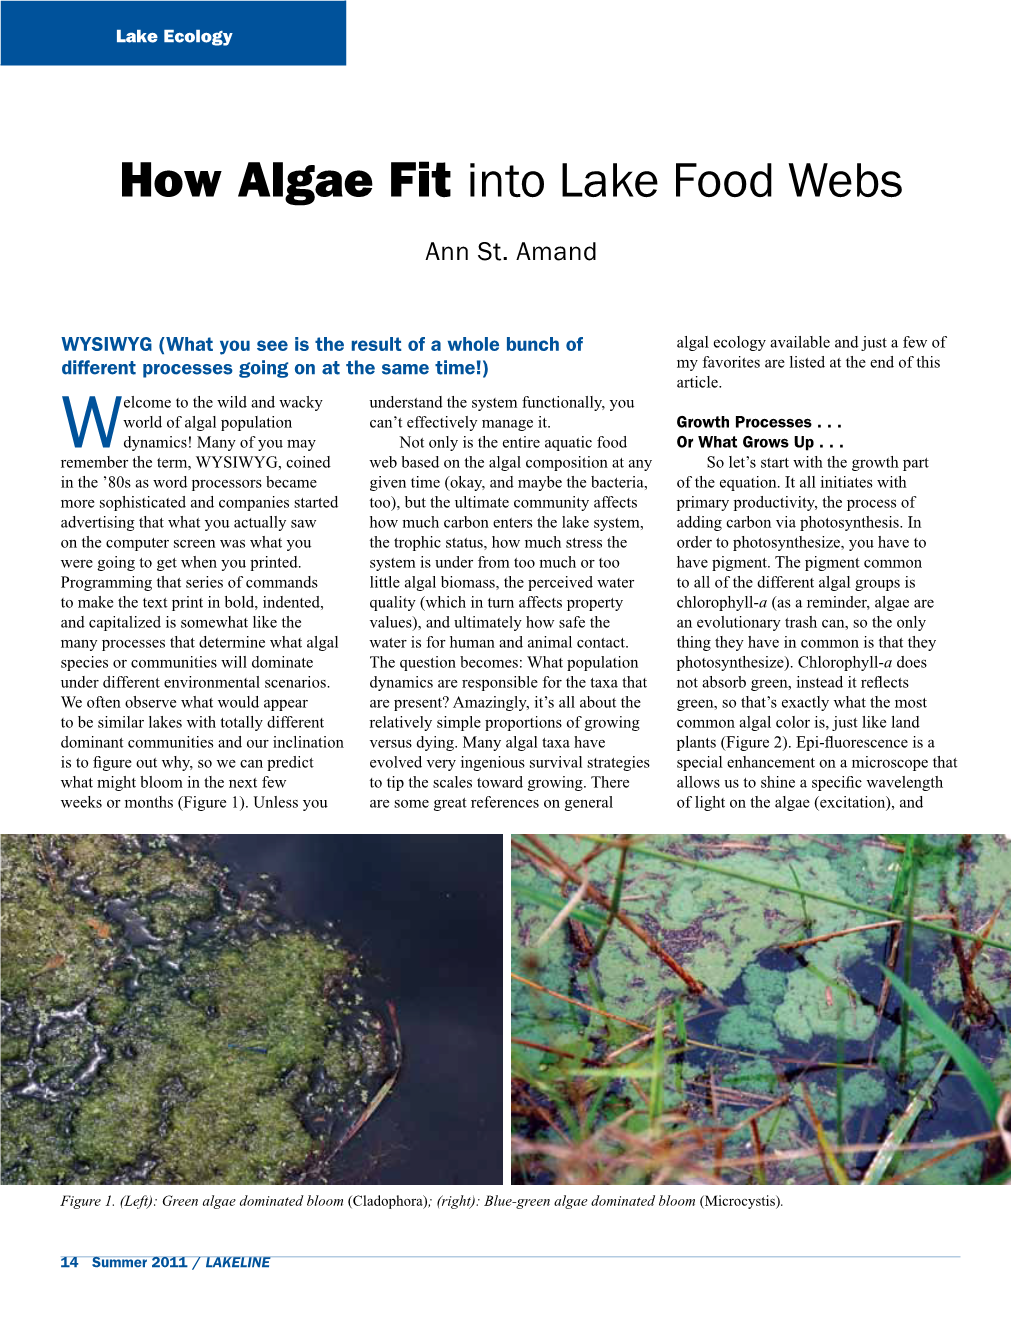 How Algae Fit Into Lake Food Webs